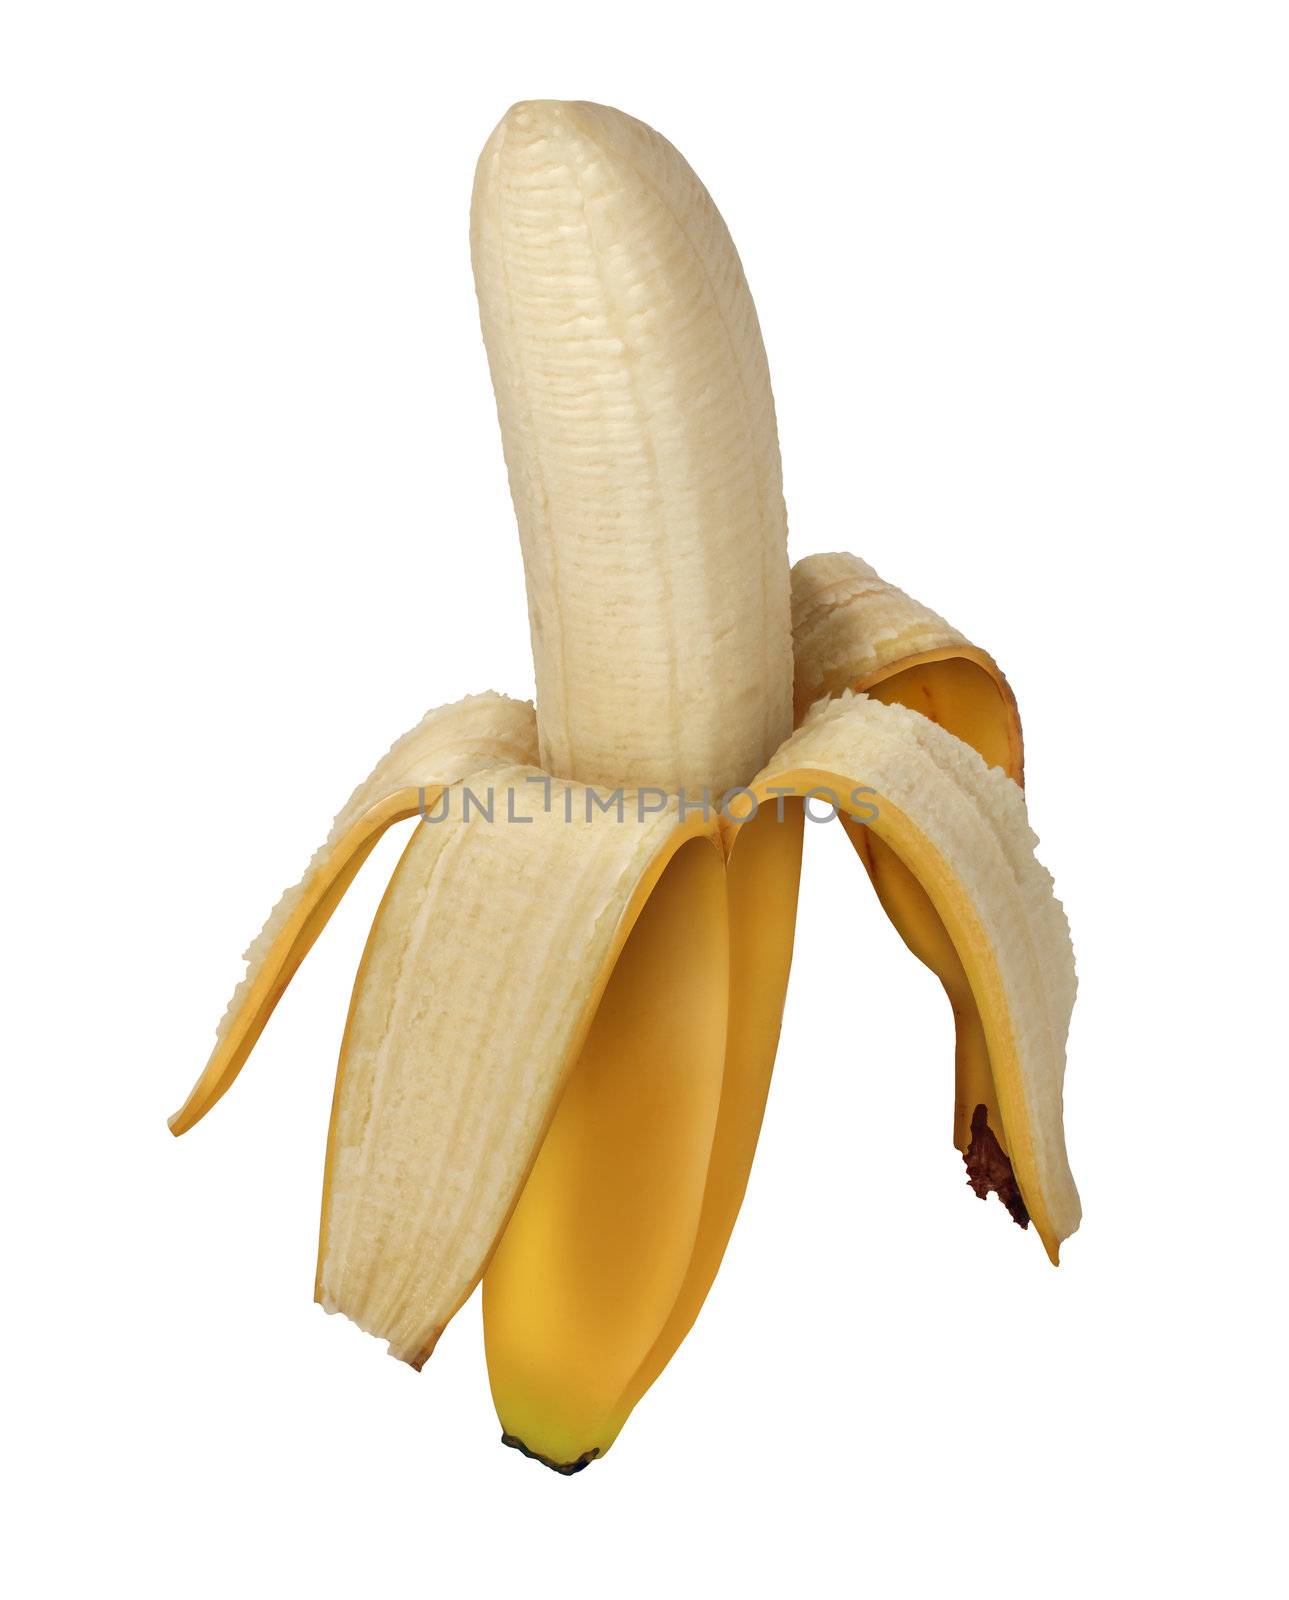 Banana Fruit Peeled by brightsource